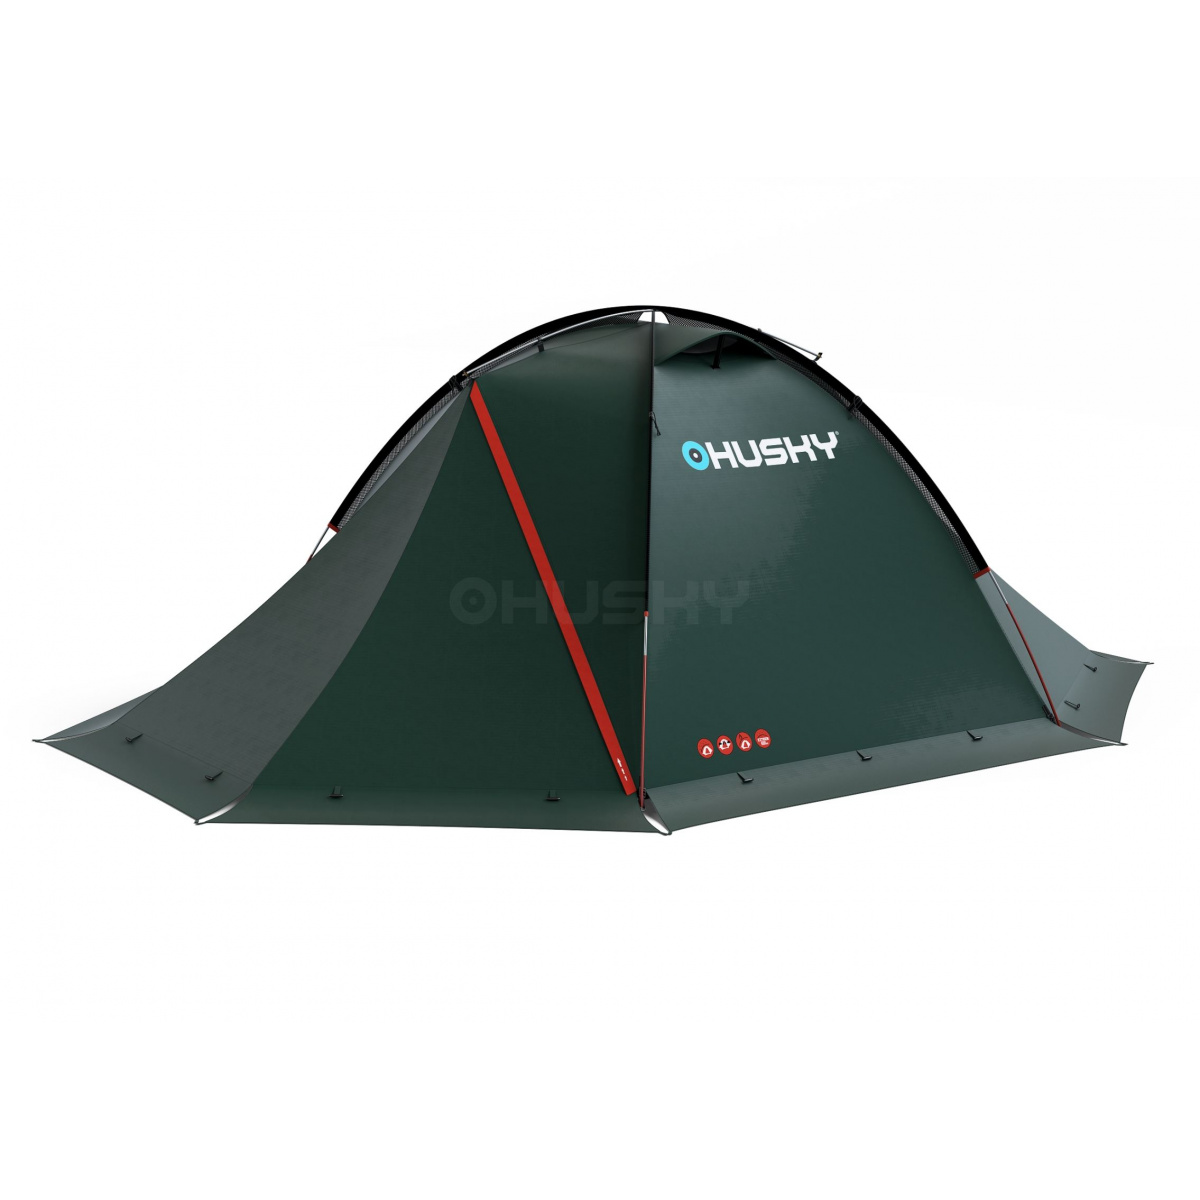 Husky Falcon 2 - Tent